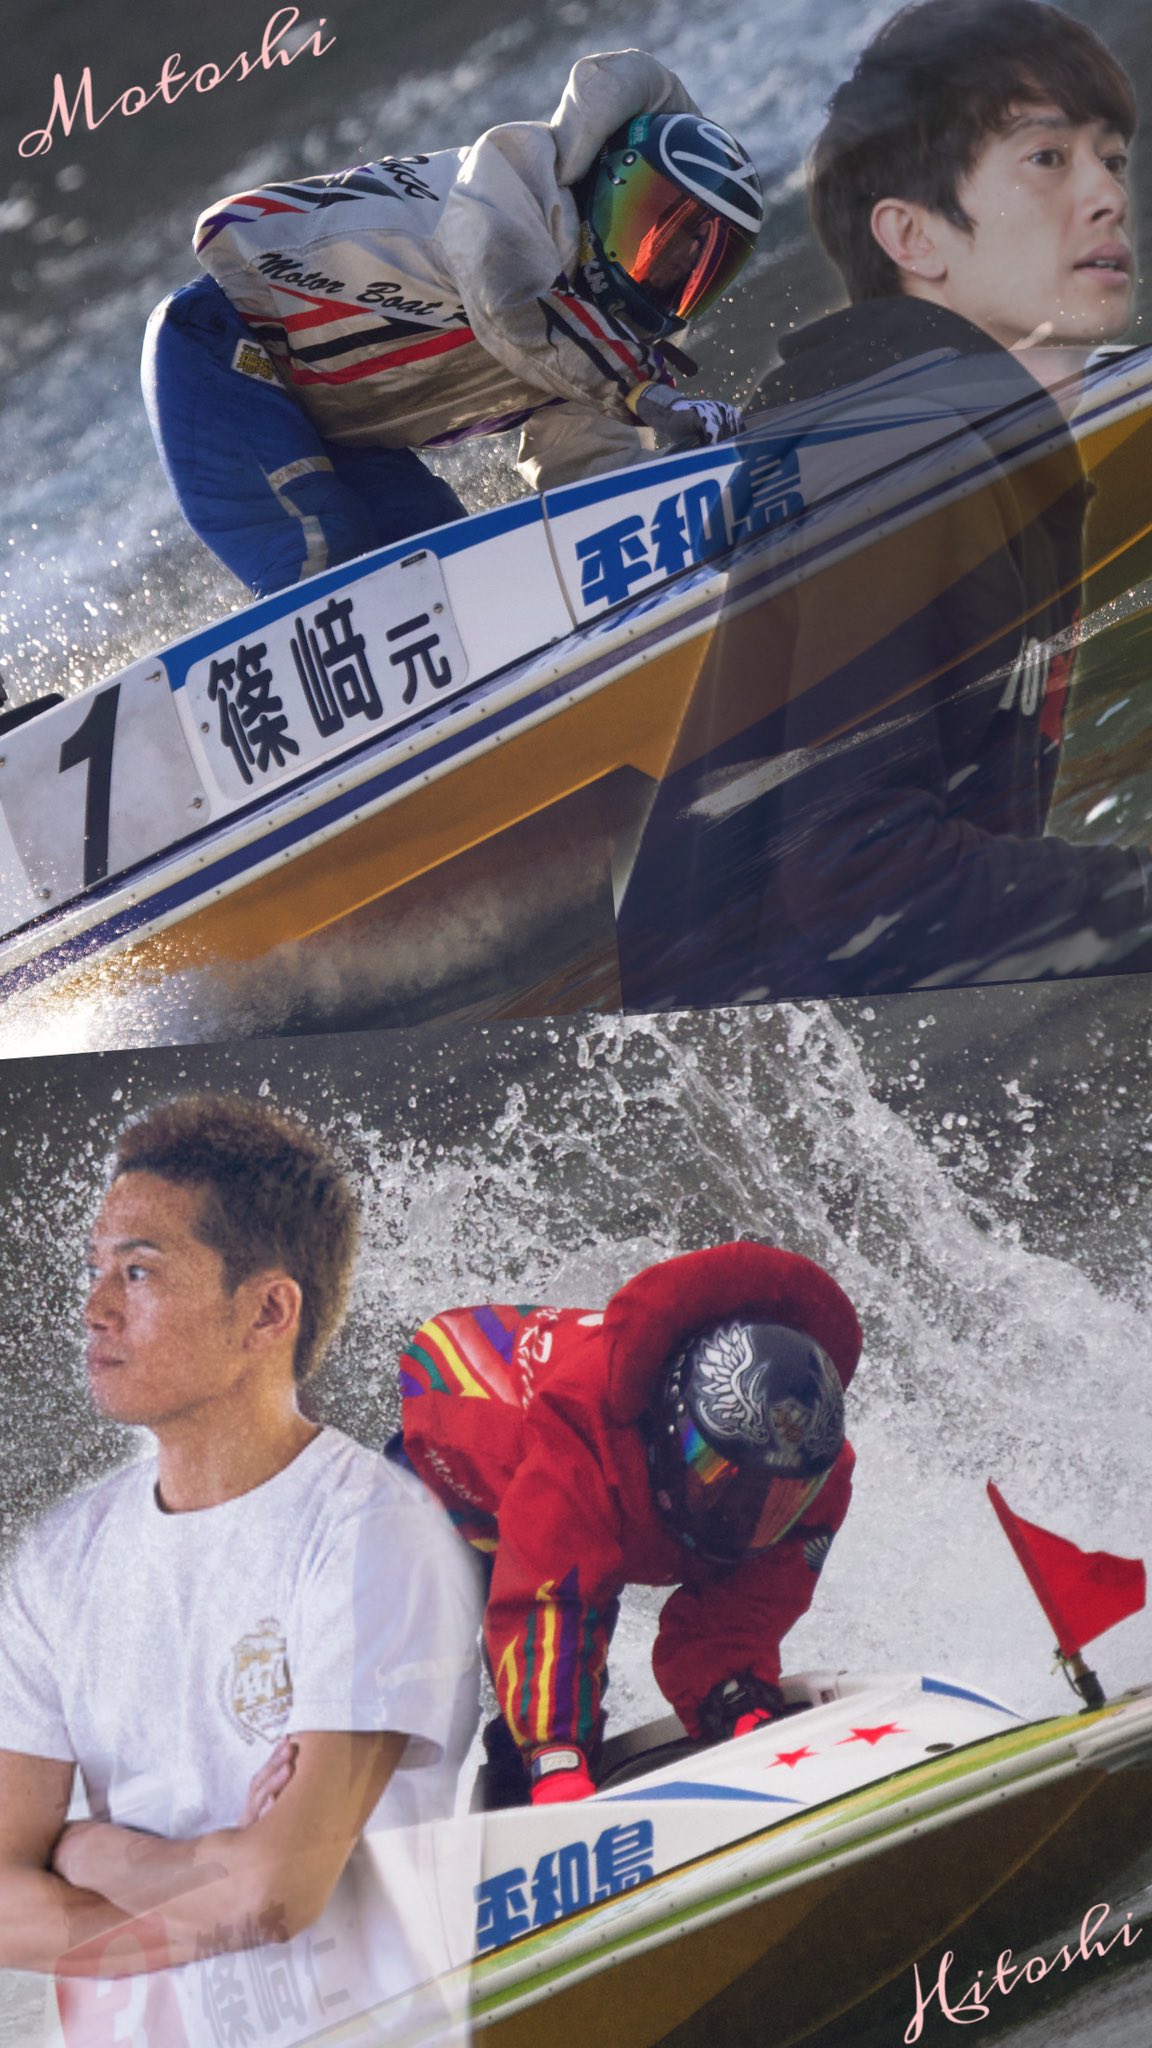 Nachi ボートレーススマホ壁紙シリーズ 篠崎兄弟も作りました 東京場の写真が多いだけに ボートの写真が東京3場多めになりそう T Co Qvqgvexn4i Twitter